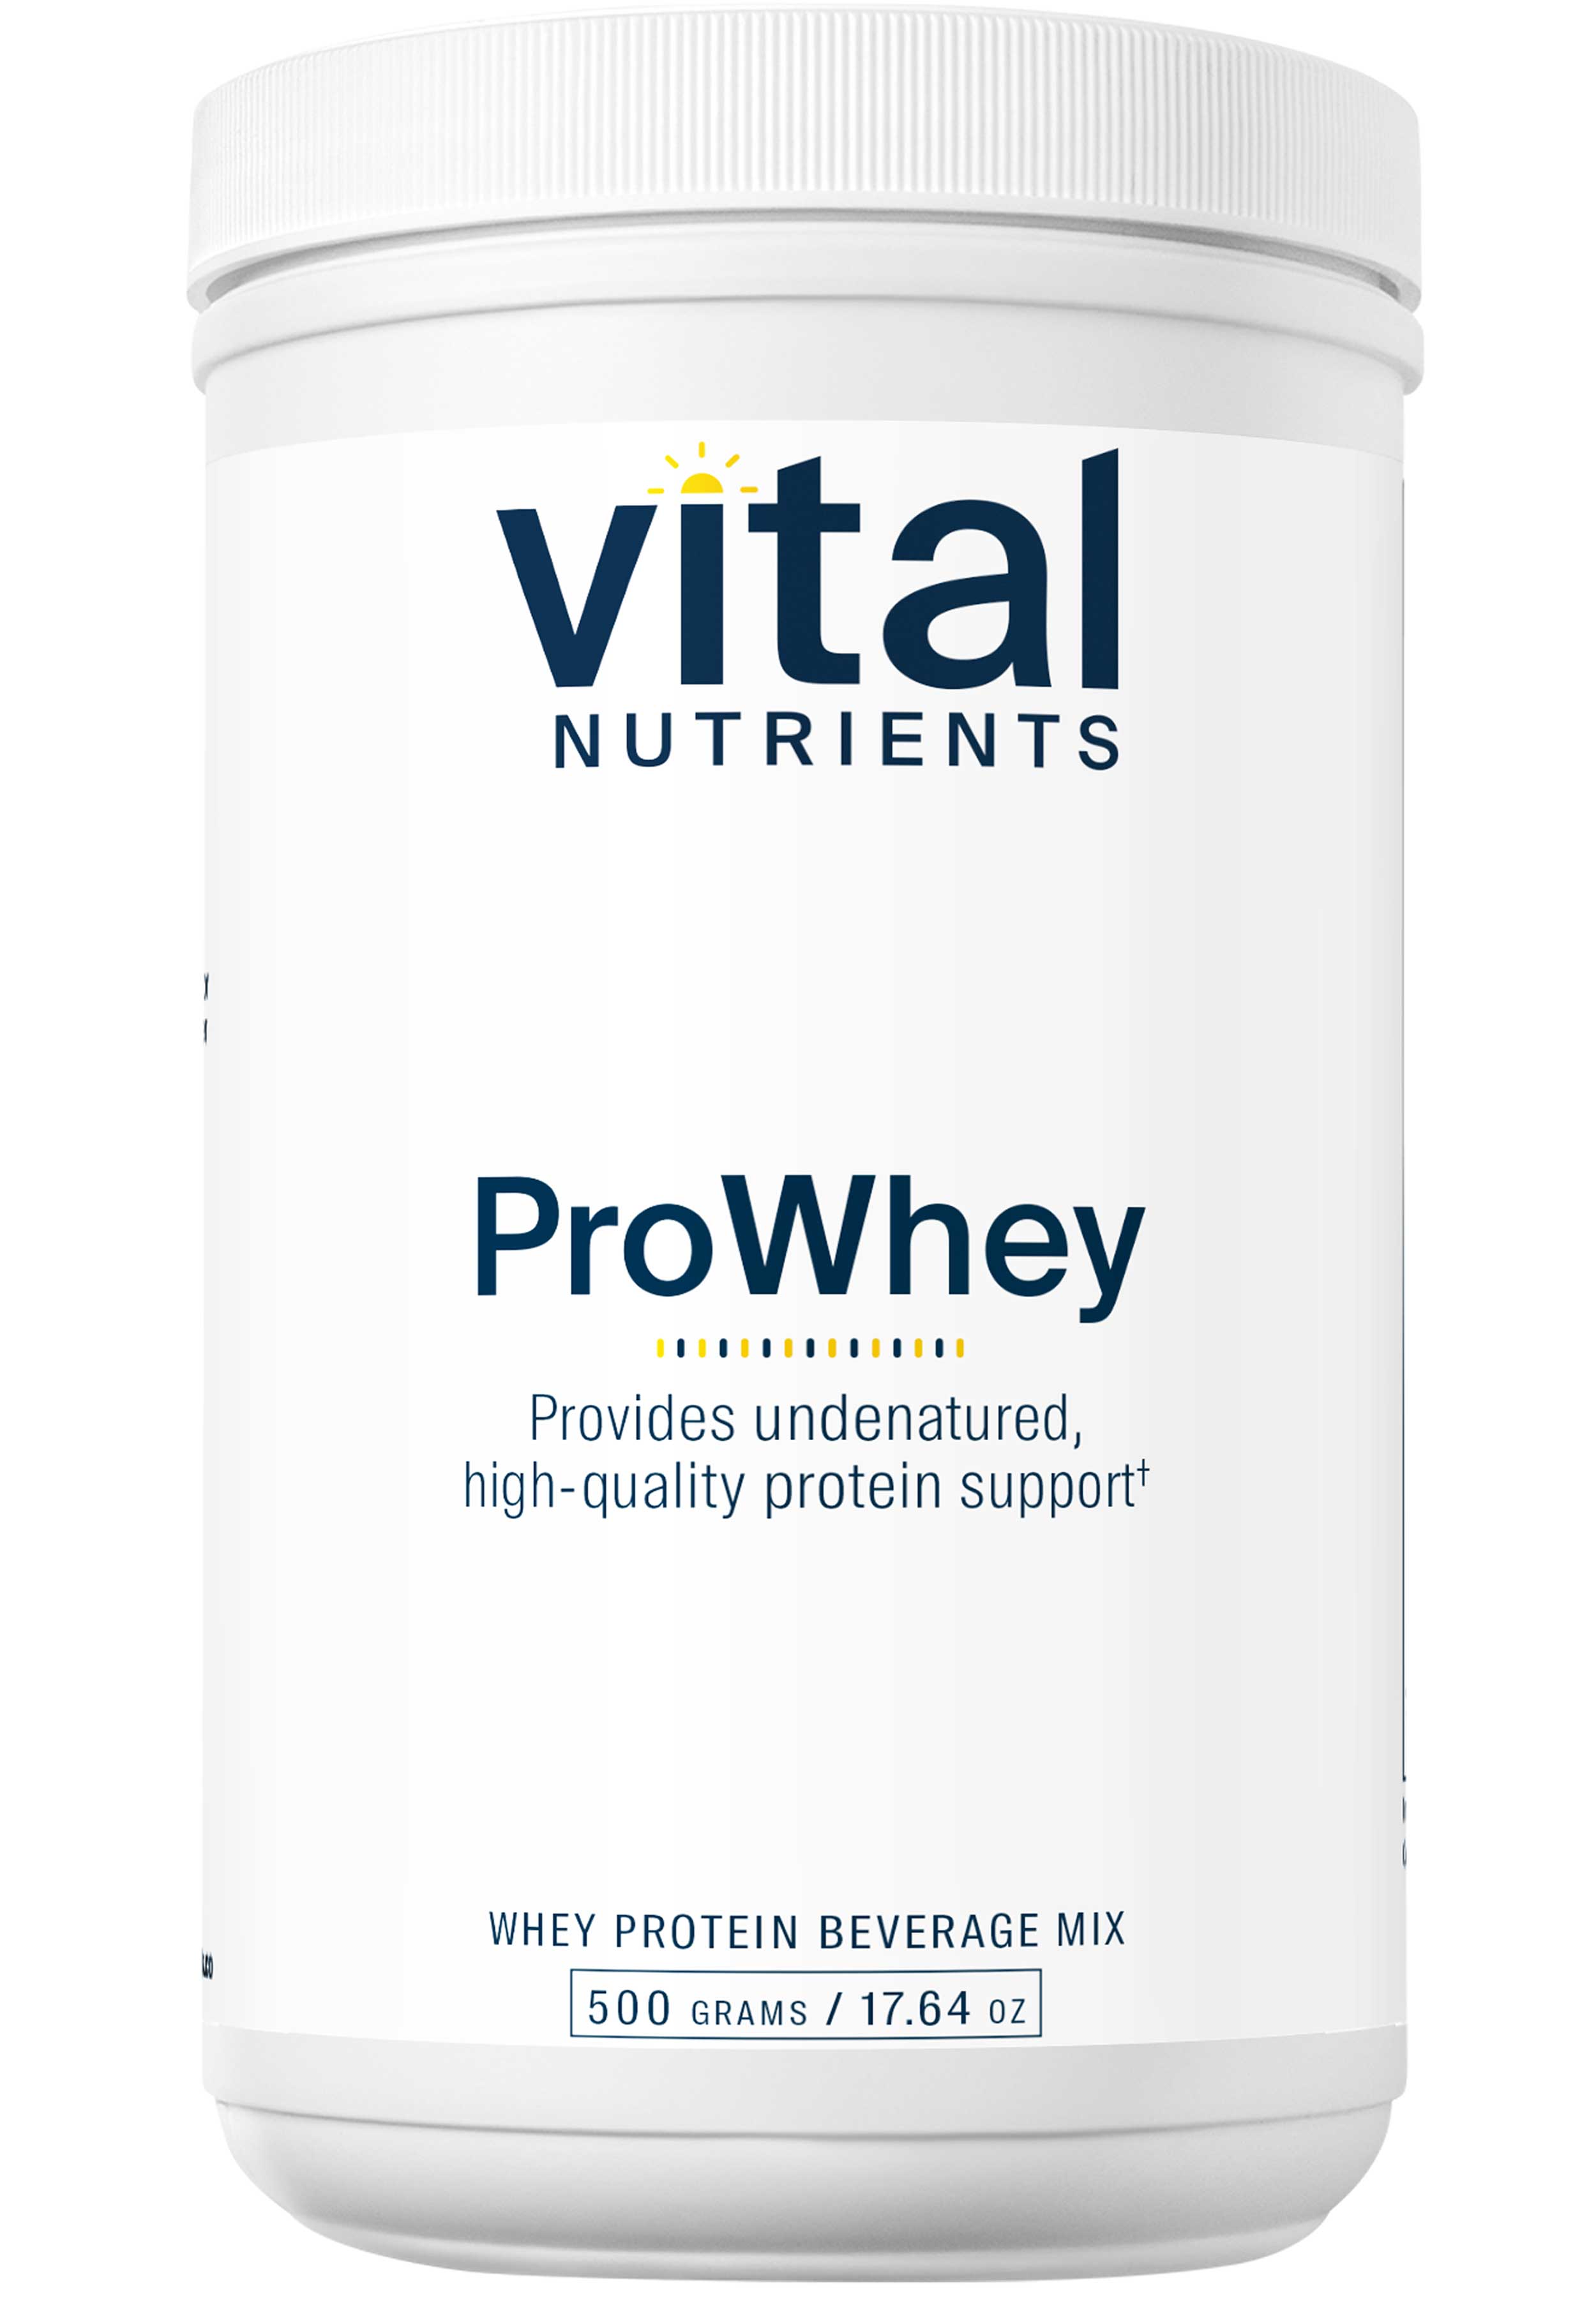 Vital Nutrients Pro Whey Plain